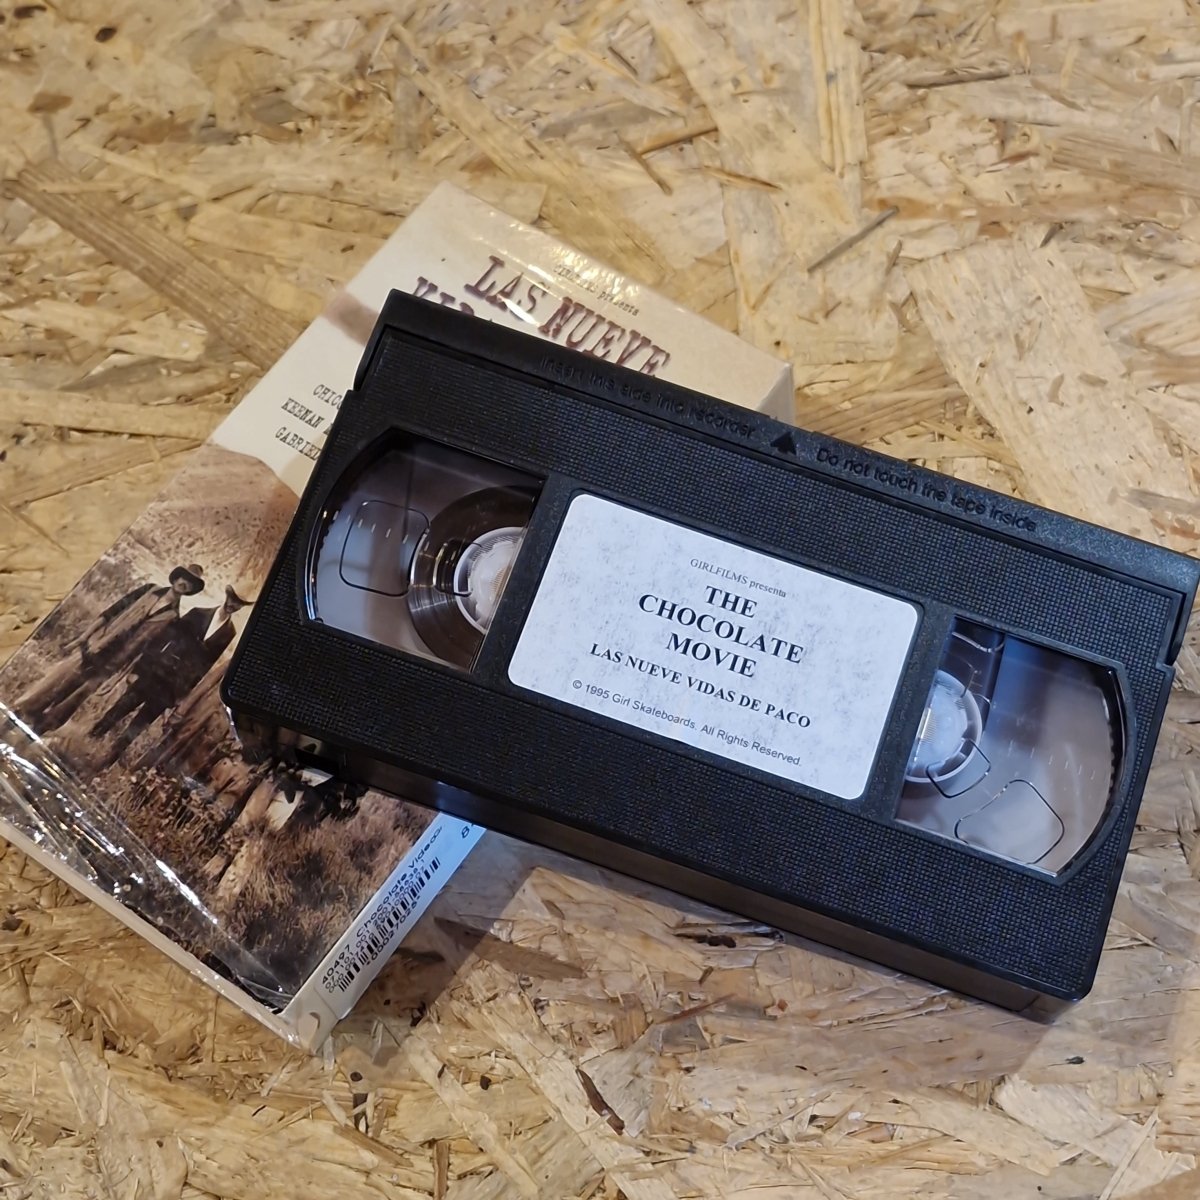 VHS Skatevideo Chocolate Las Nueve Vidas De Paco 1995 - VHS - Rollbrett Mission